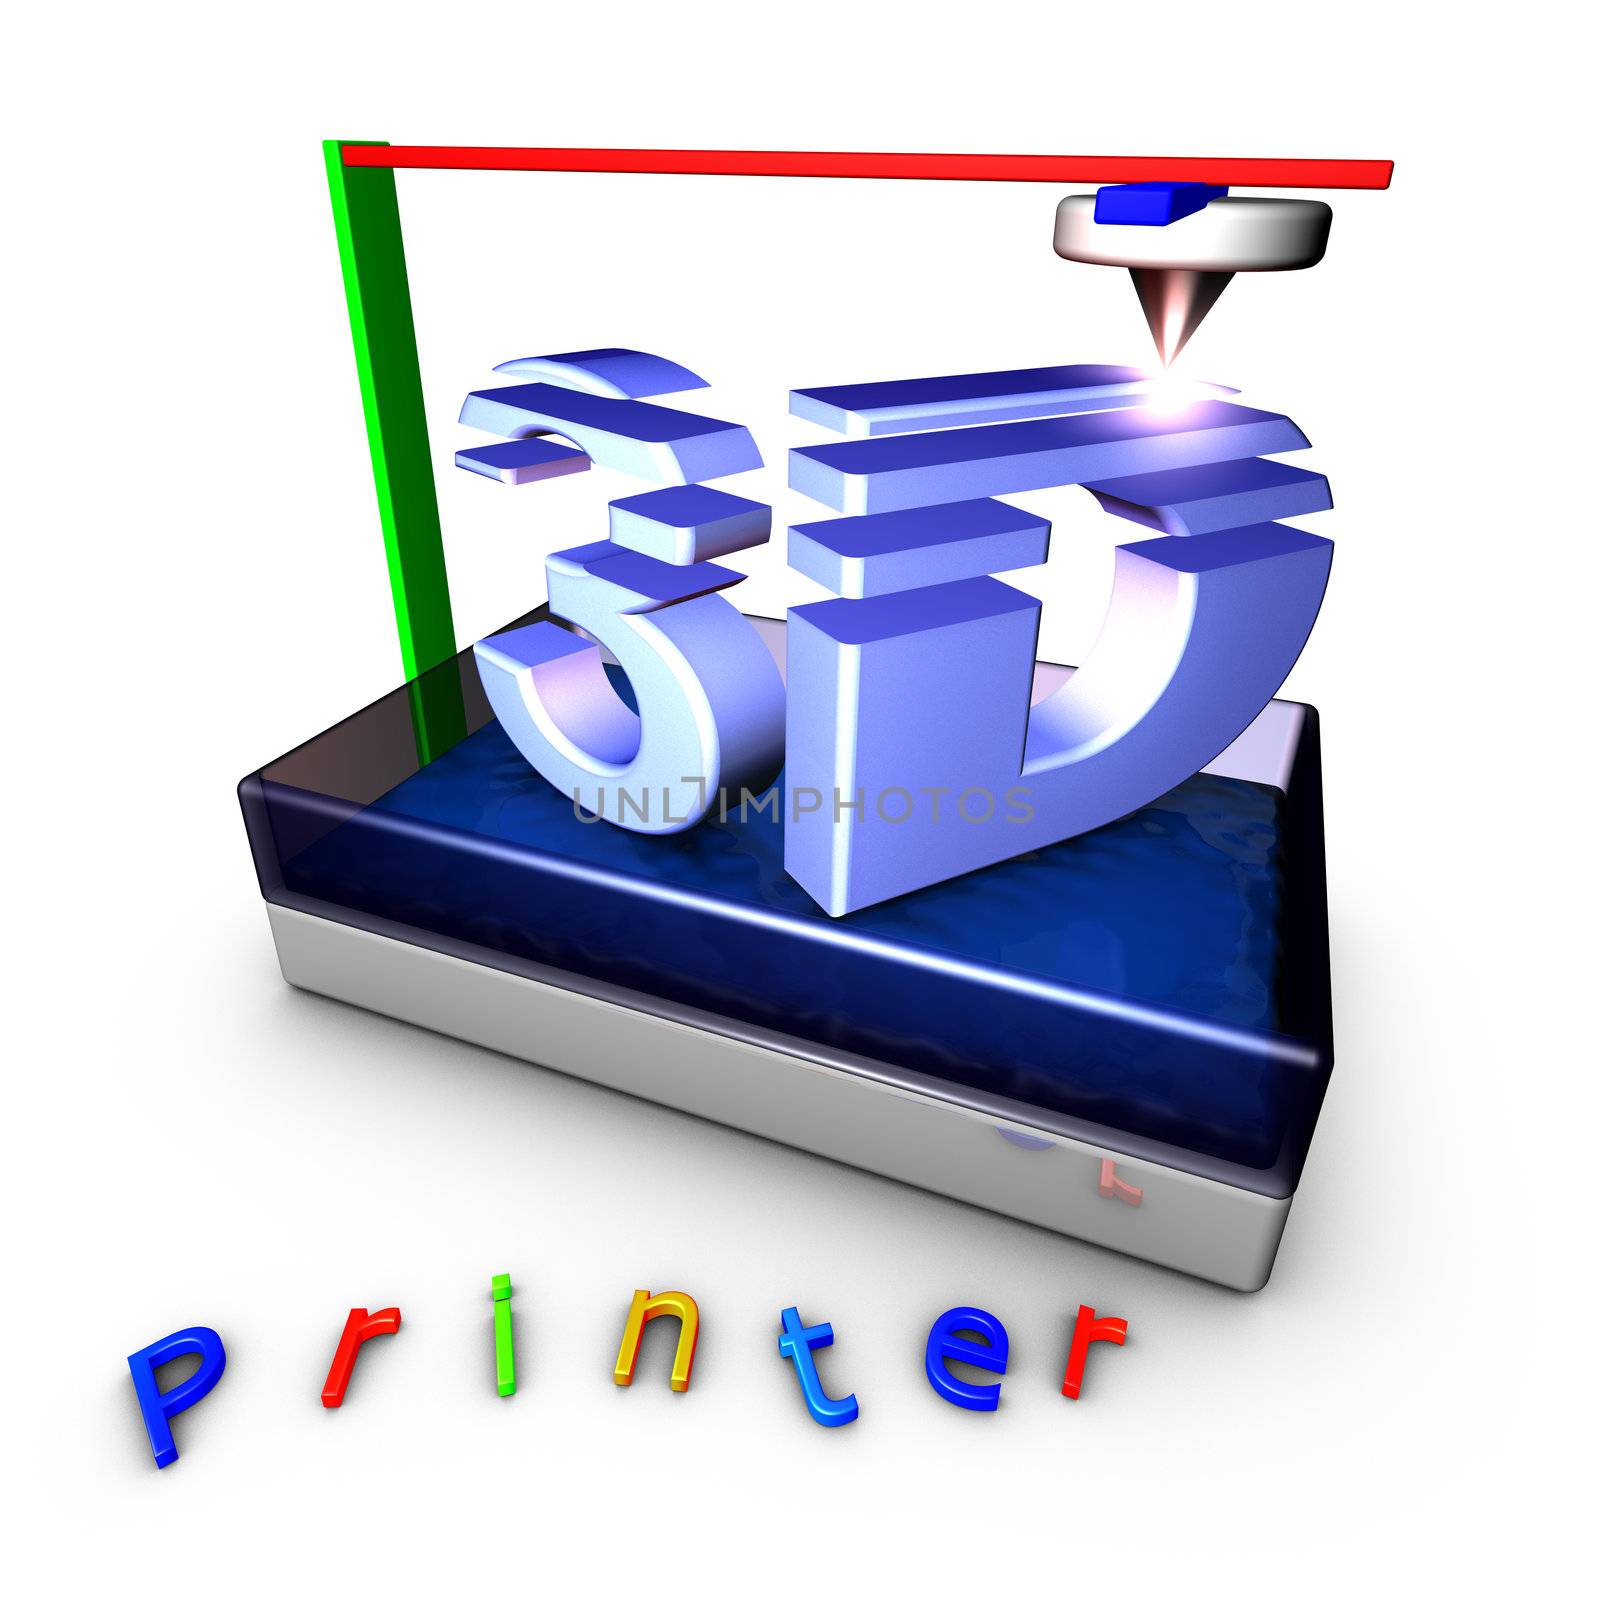 3D Printer using photopolymerization by ytjo